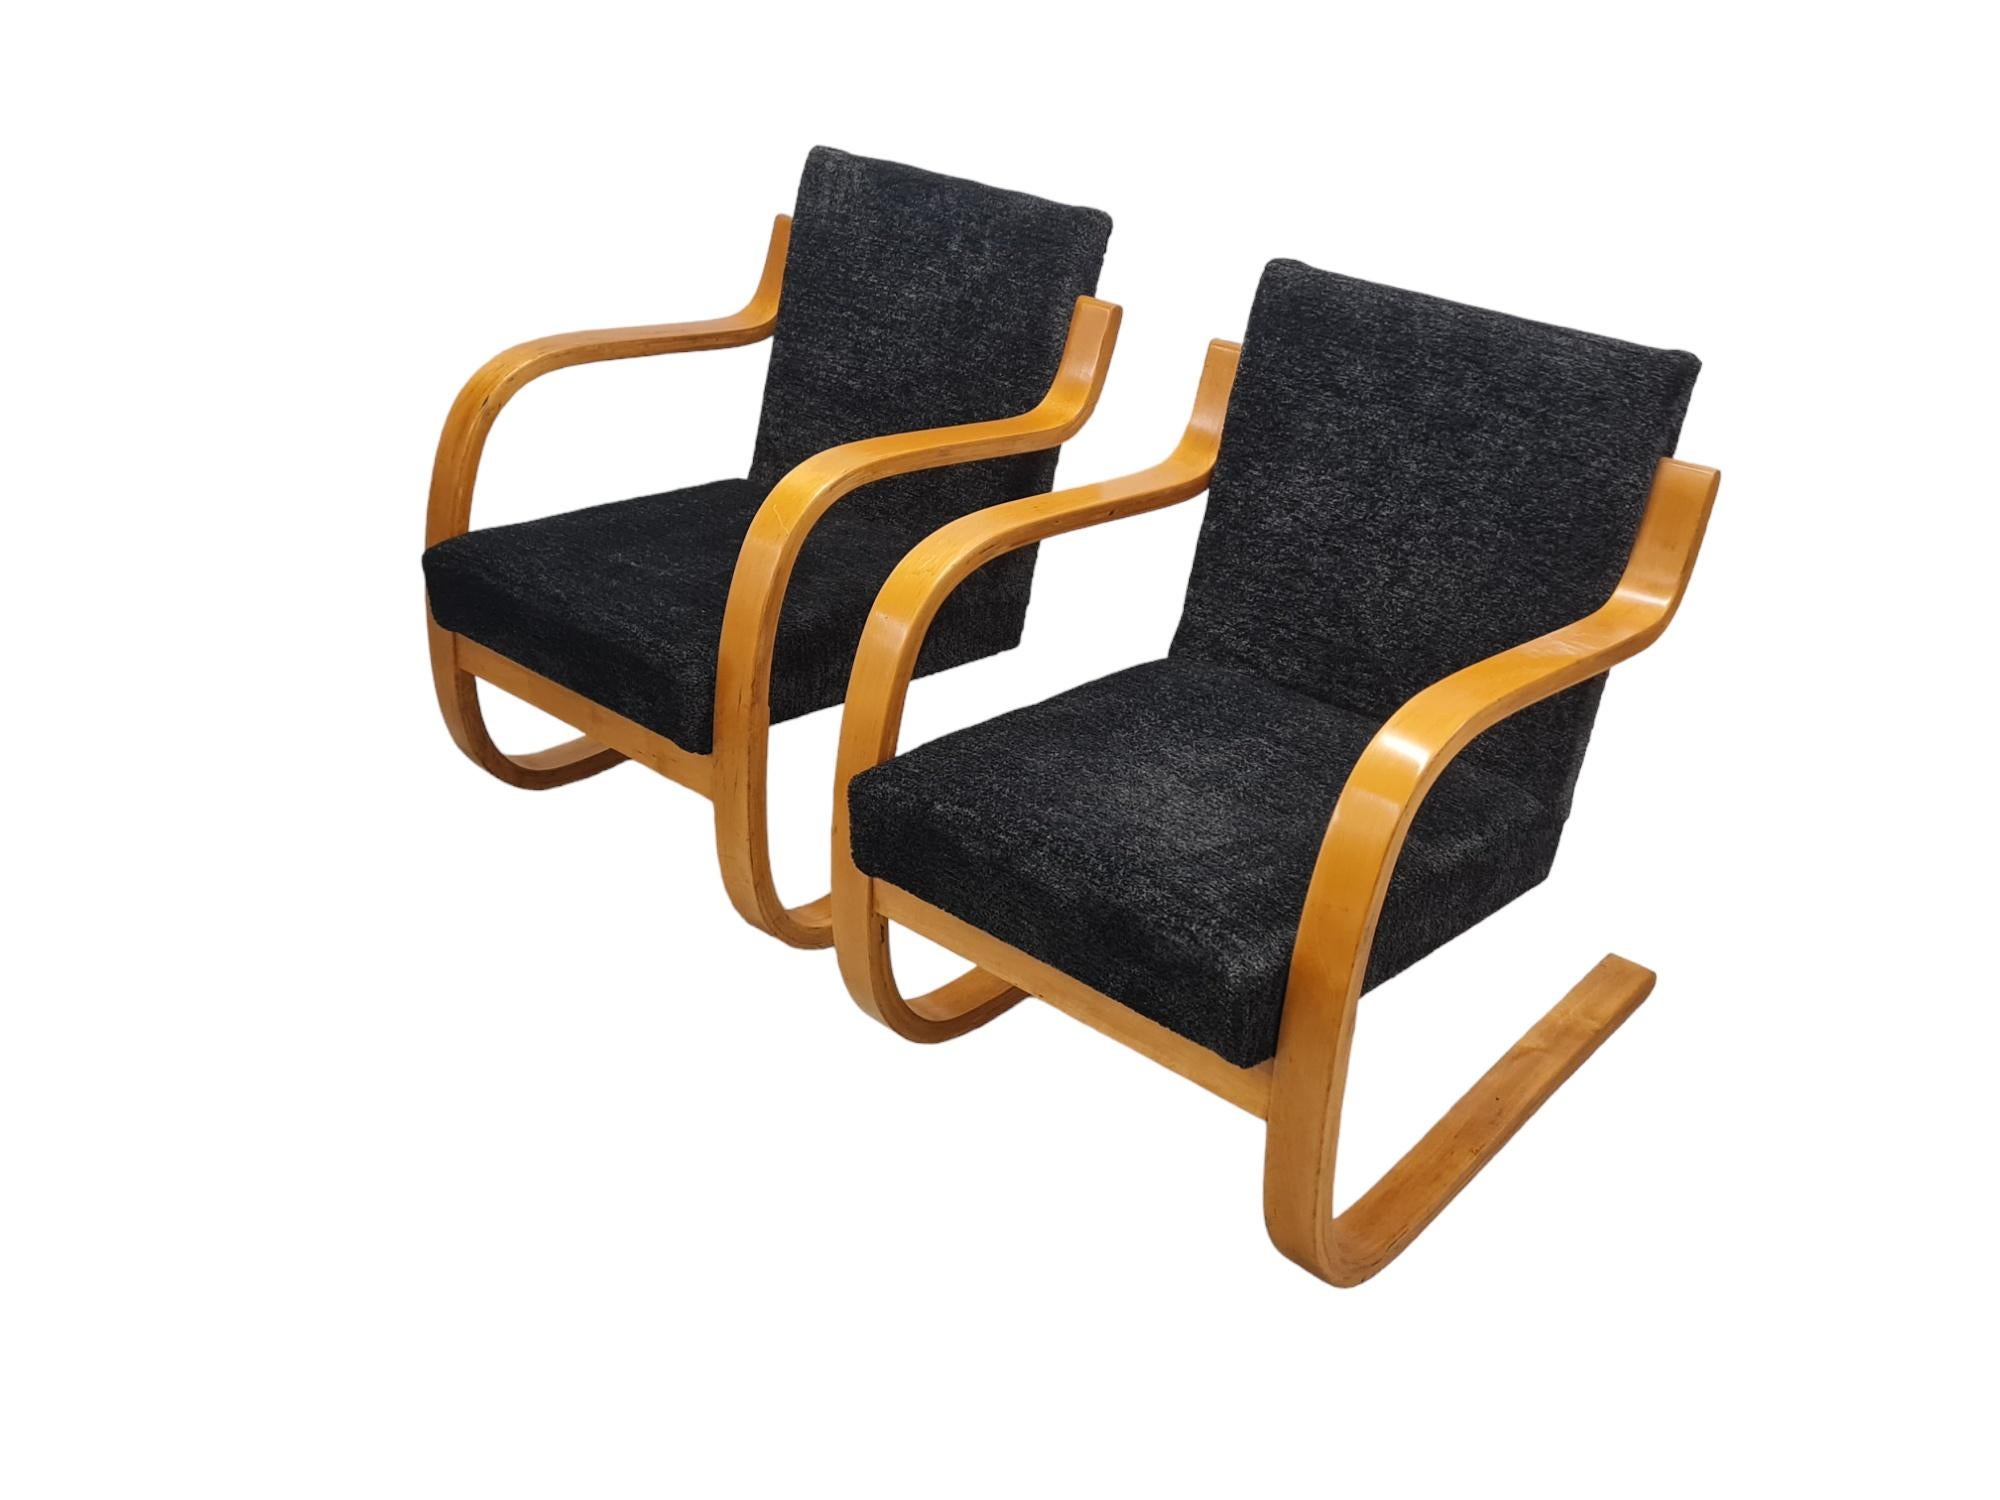 Alvar Aalto Ein Paar Artek Freischwinger-Sessel Modell 402, 1950er Jahre (Skandinavische Moderne) im Angebot